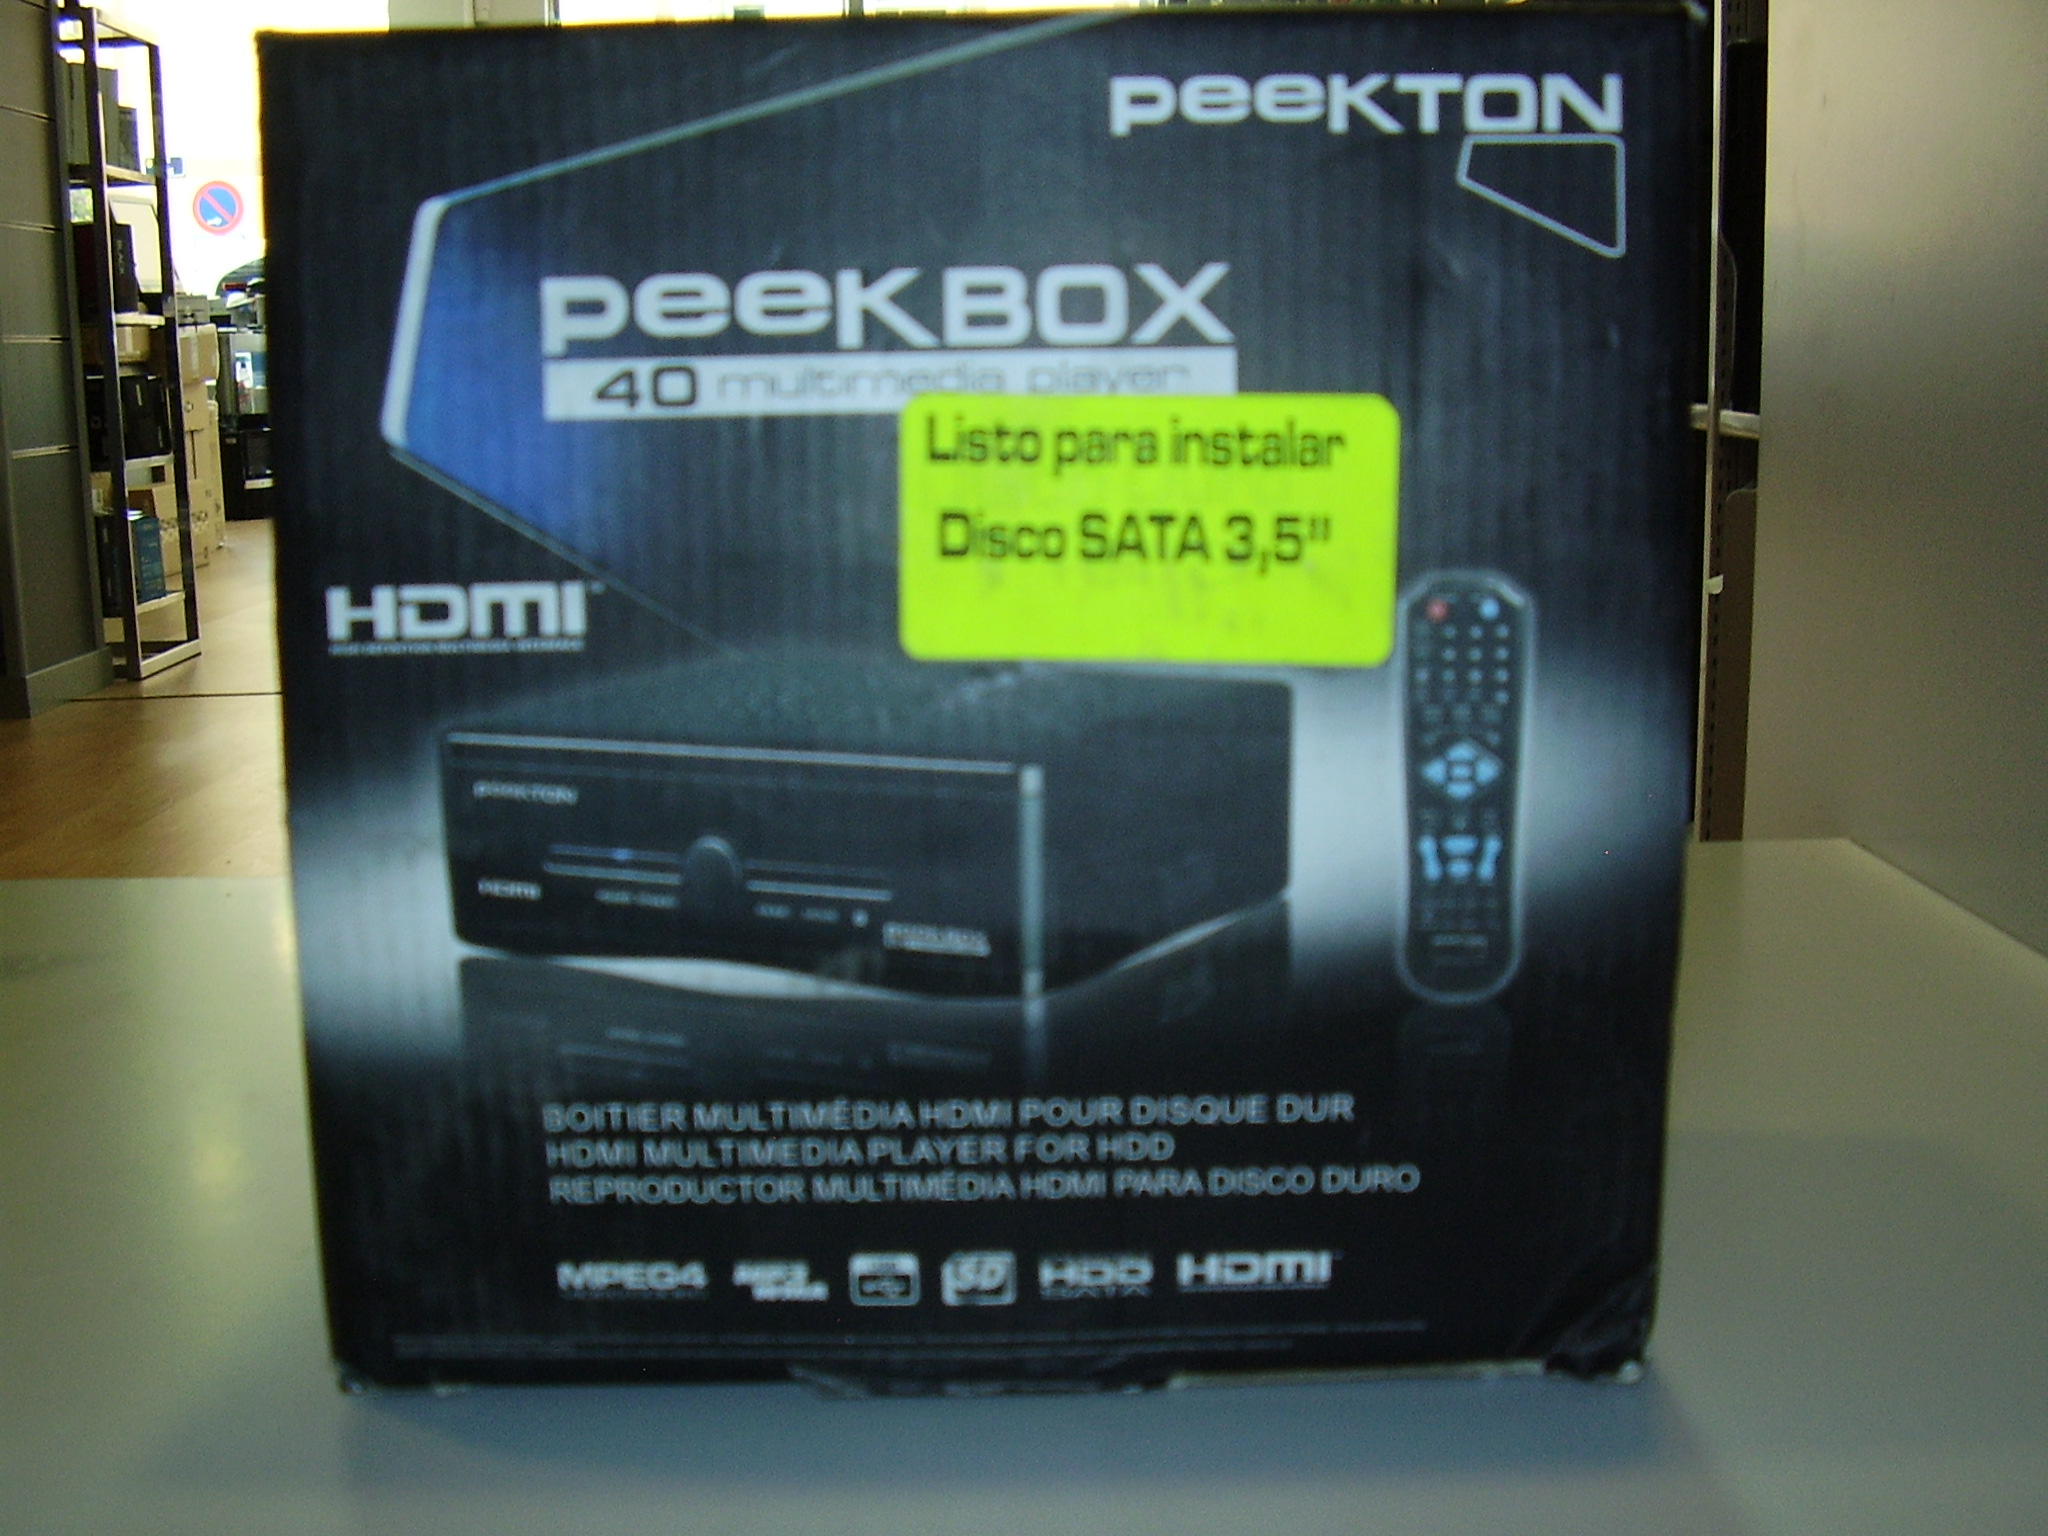 Peekton Peekbox 40 - Disco multimedia (HDMI, USB, tarjetas host SD/MMC, 500 GB). Chollos Informatica